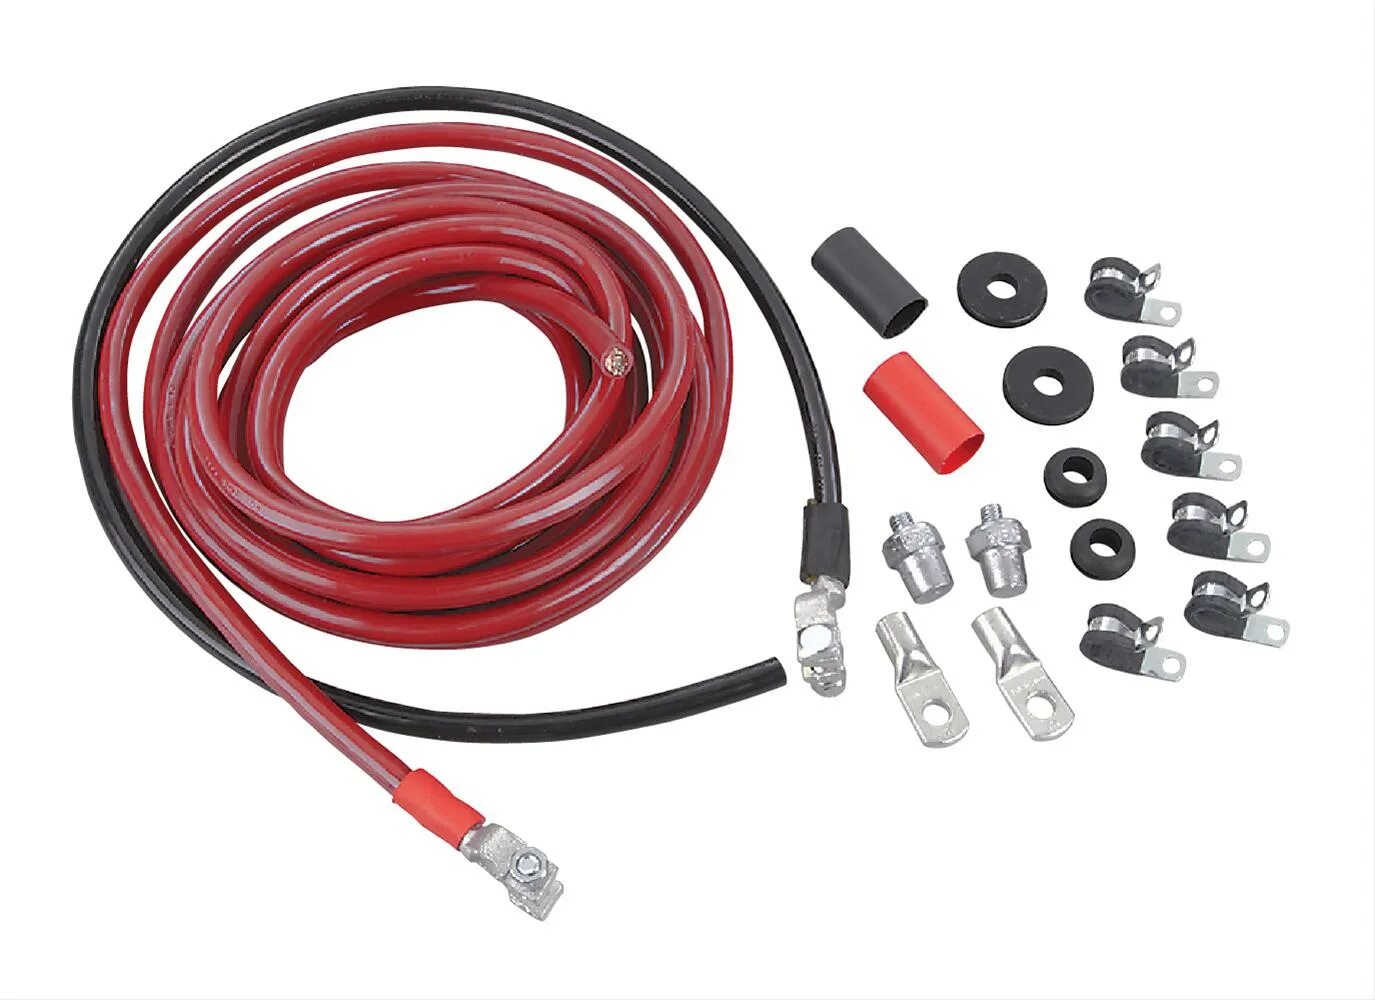 Cable Kit s.v.compr.1 TXV PDX. Ehzx-4.0AEC комплект DX Kit. С320 Battery Cable. CDC Batt провод. Battery kit